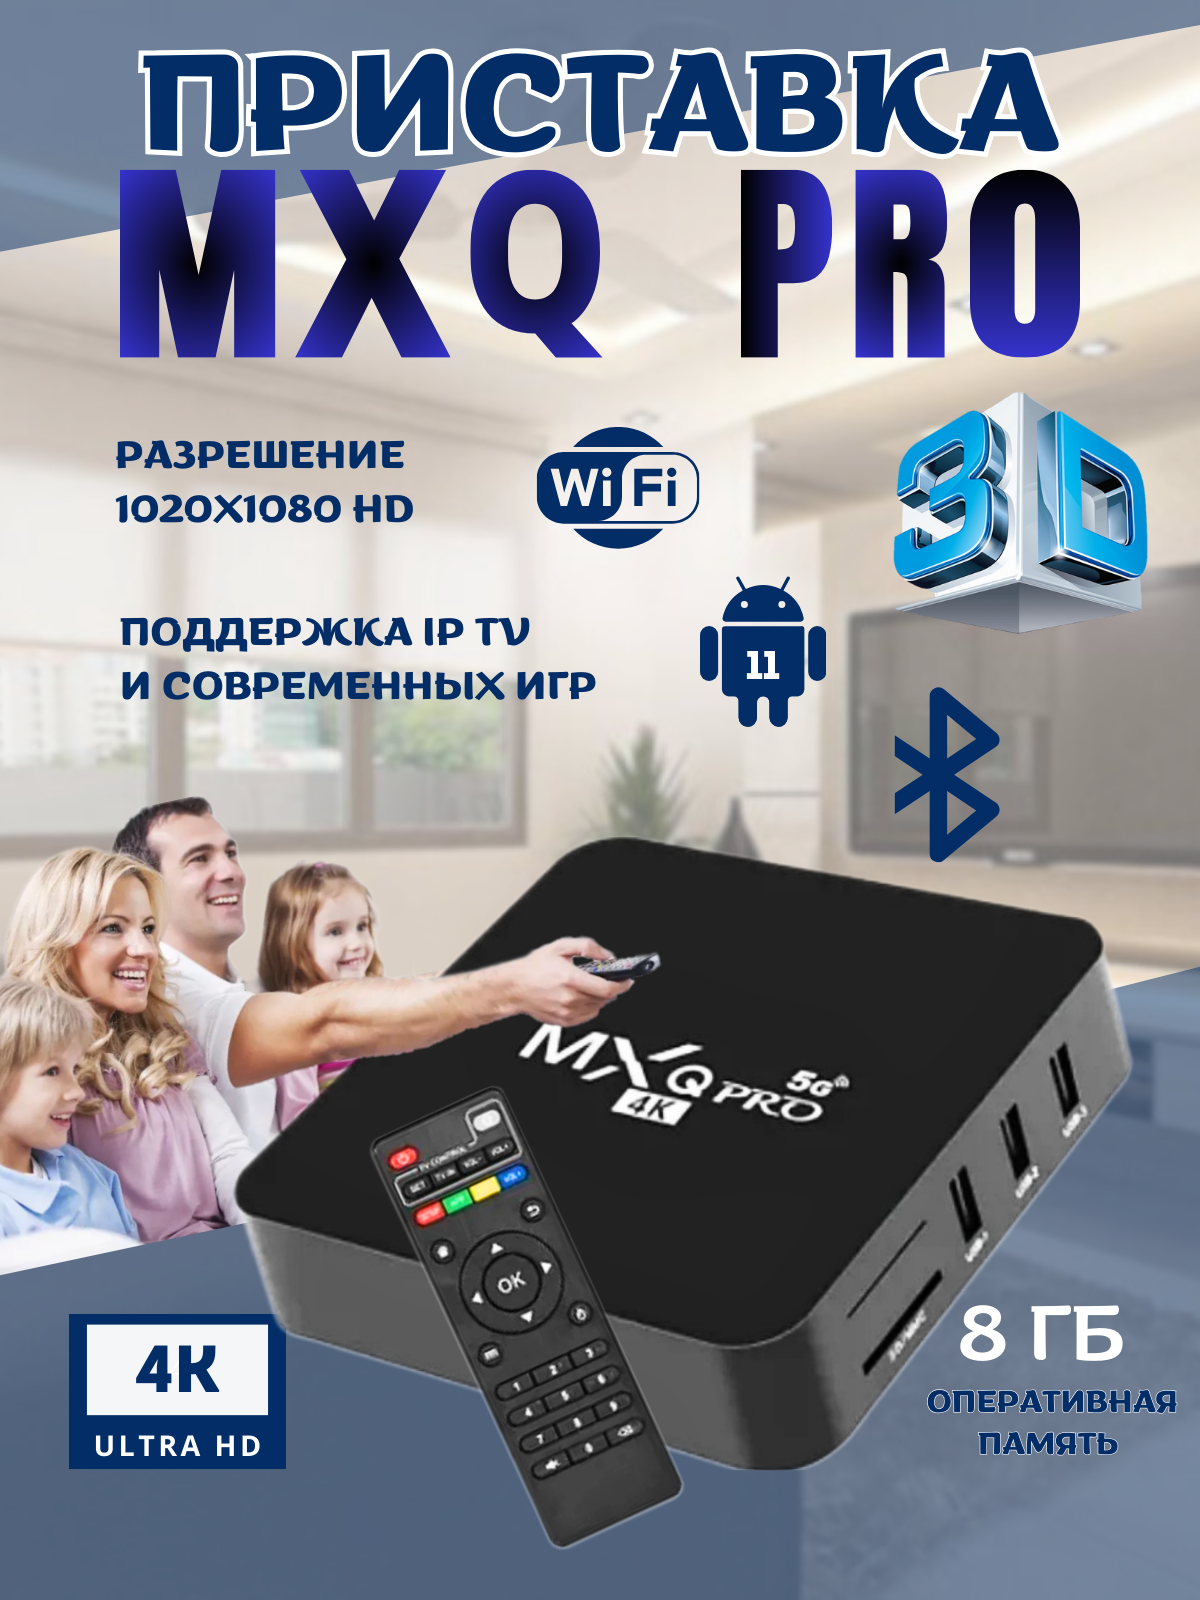 Медиаплеер MXQ Pro 4K 2/16 GB